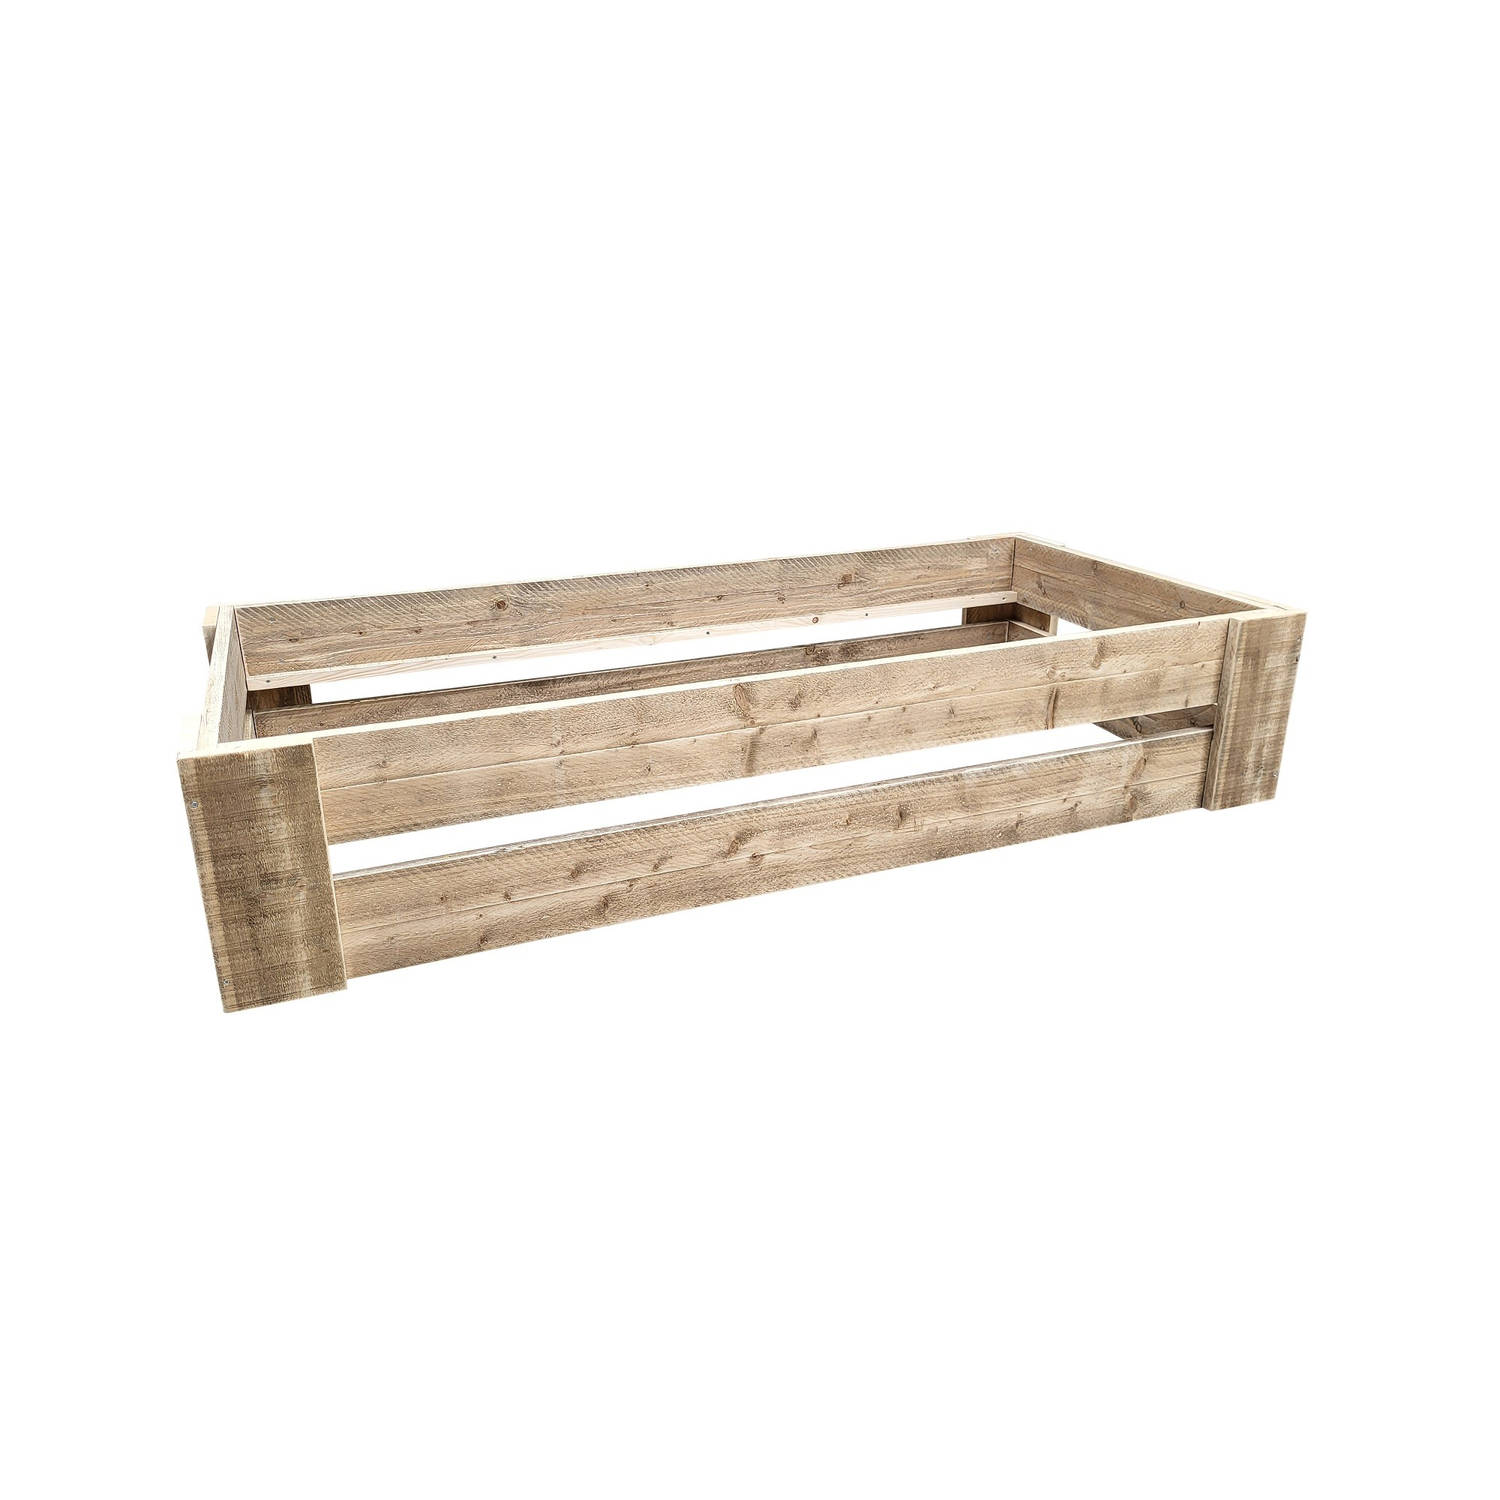 Wood4you - Eenpersoonsbed Krijn steigerhout - Montagepakket 206Lx43Hx86D cm